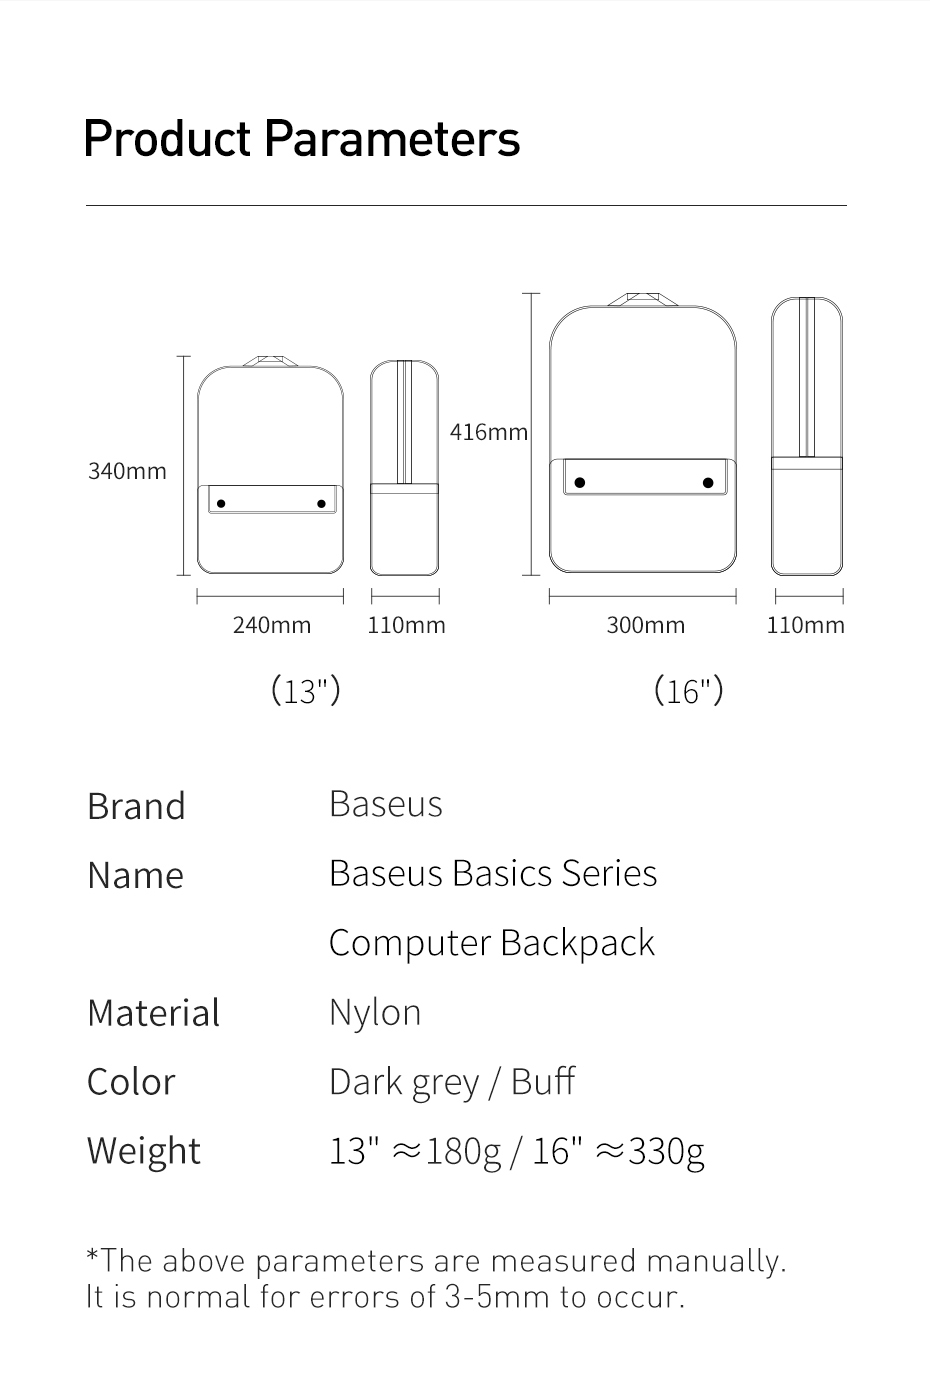 Baseus-20L-Laptop-Backpacks-Bag-Macbook-Computer-Bag-Light-Weight-Travel-Daypacks-Men-Leisure-Backpa-1706596-10